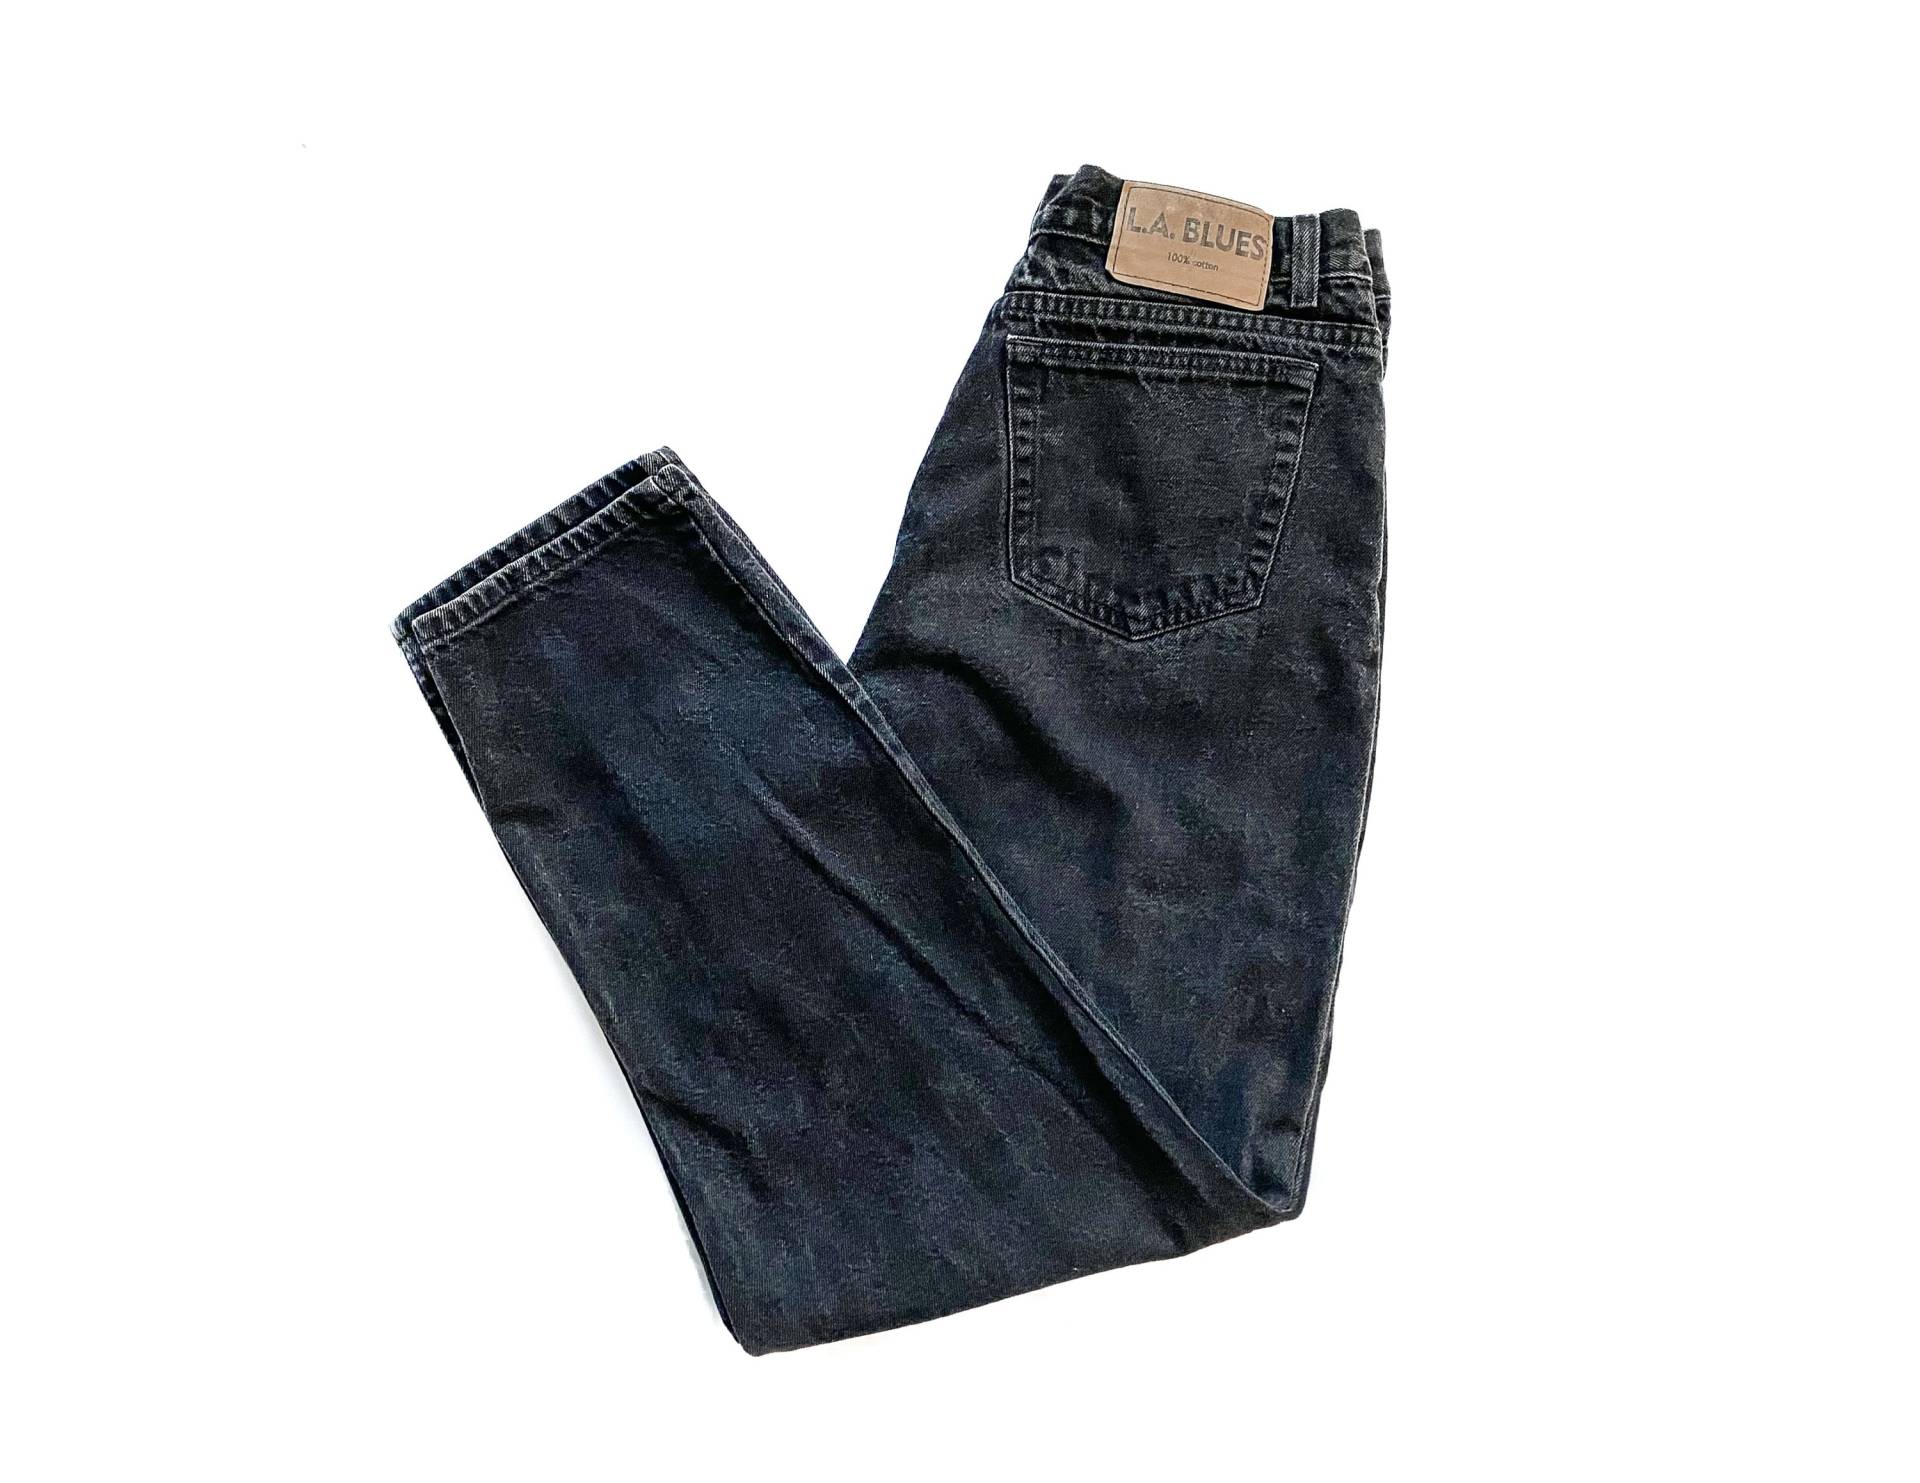 Vintage Jeans | Gr. 16 L.a. Blues Black Jeanshose Hochhaus, Gerades Bein Mama 80Er, 90Er Jahre Mode von MissSarahBelle